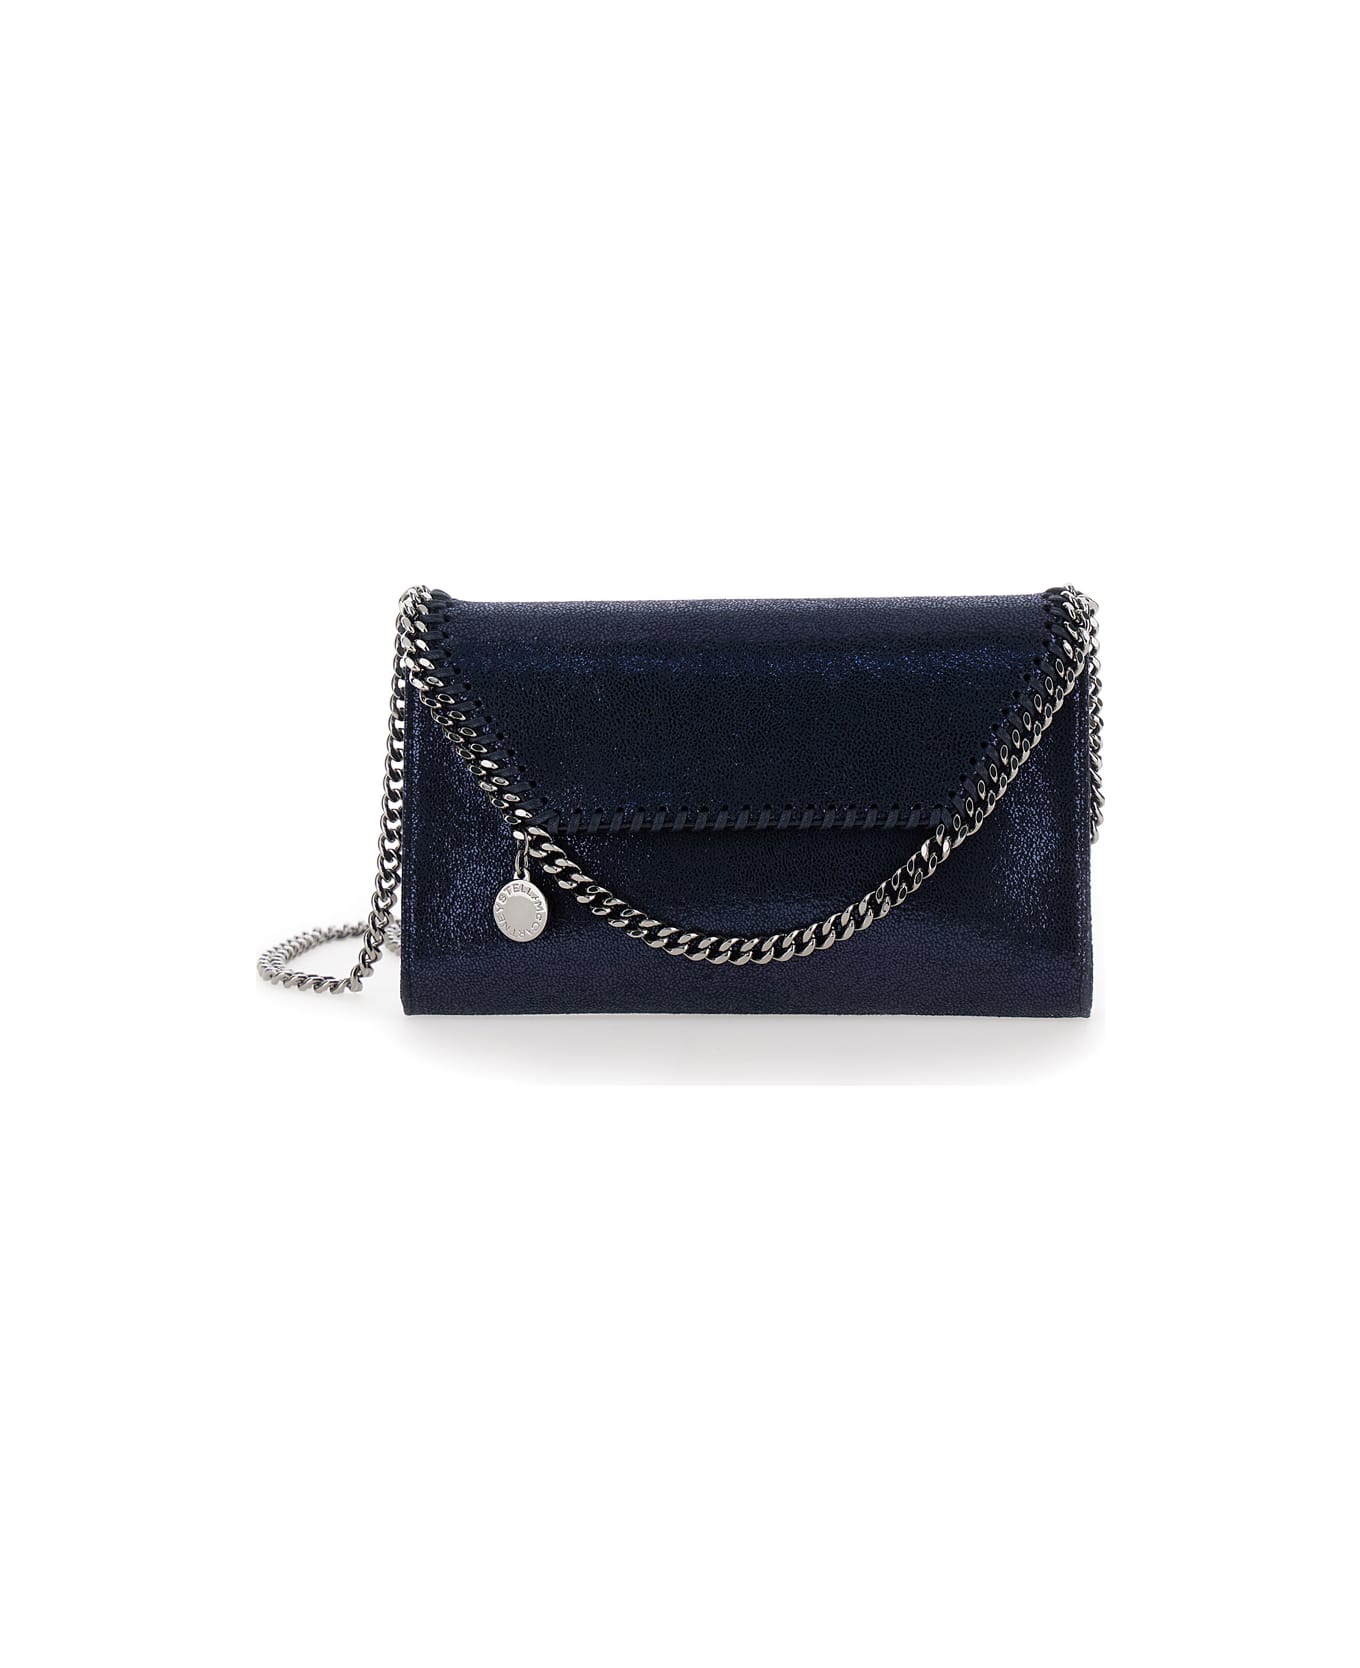 Stella McCartney 'mini Falabella' Blue Crossbody Bag With Logo Charm In Eco Leather Woman - Blu ショルダーバッグ